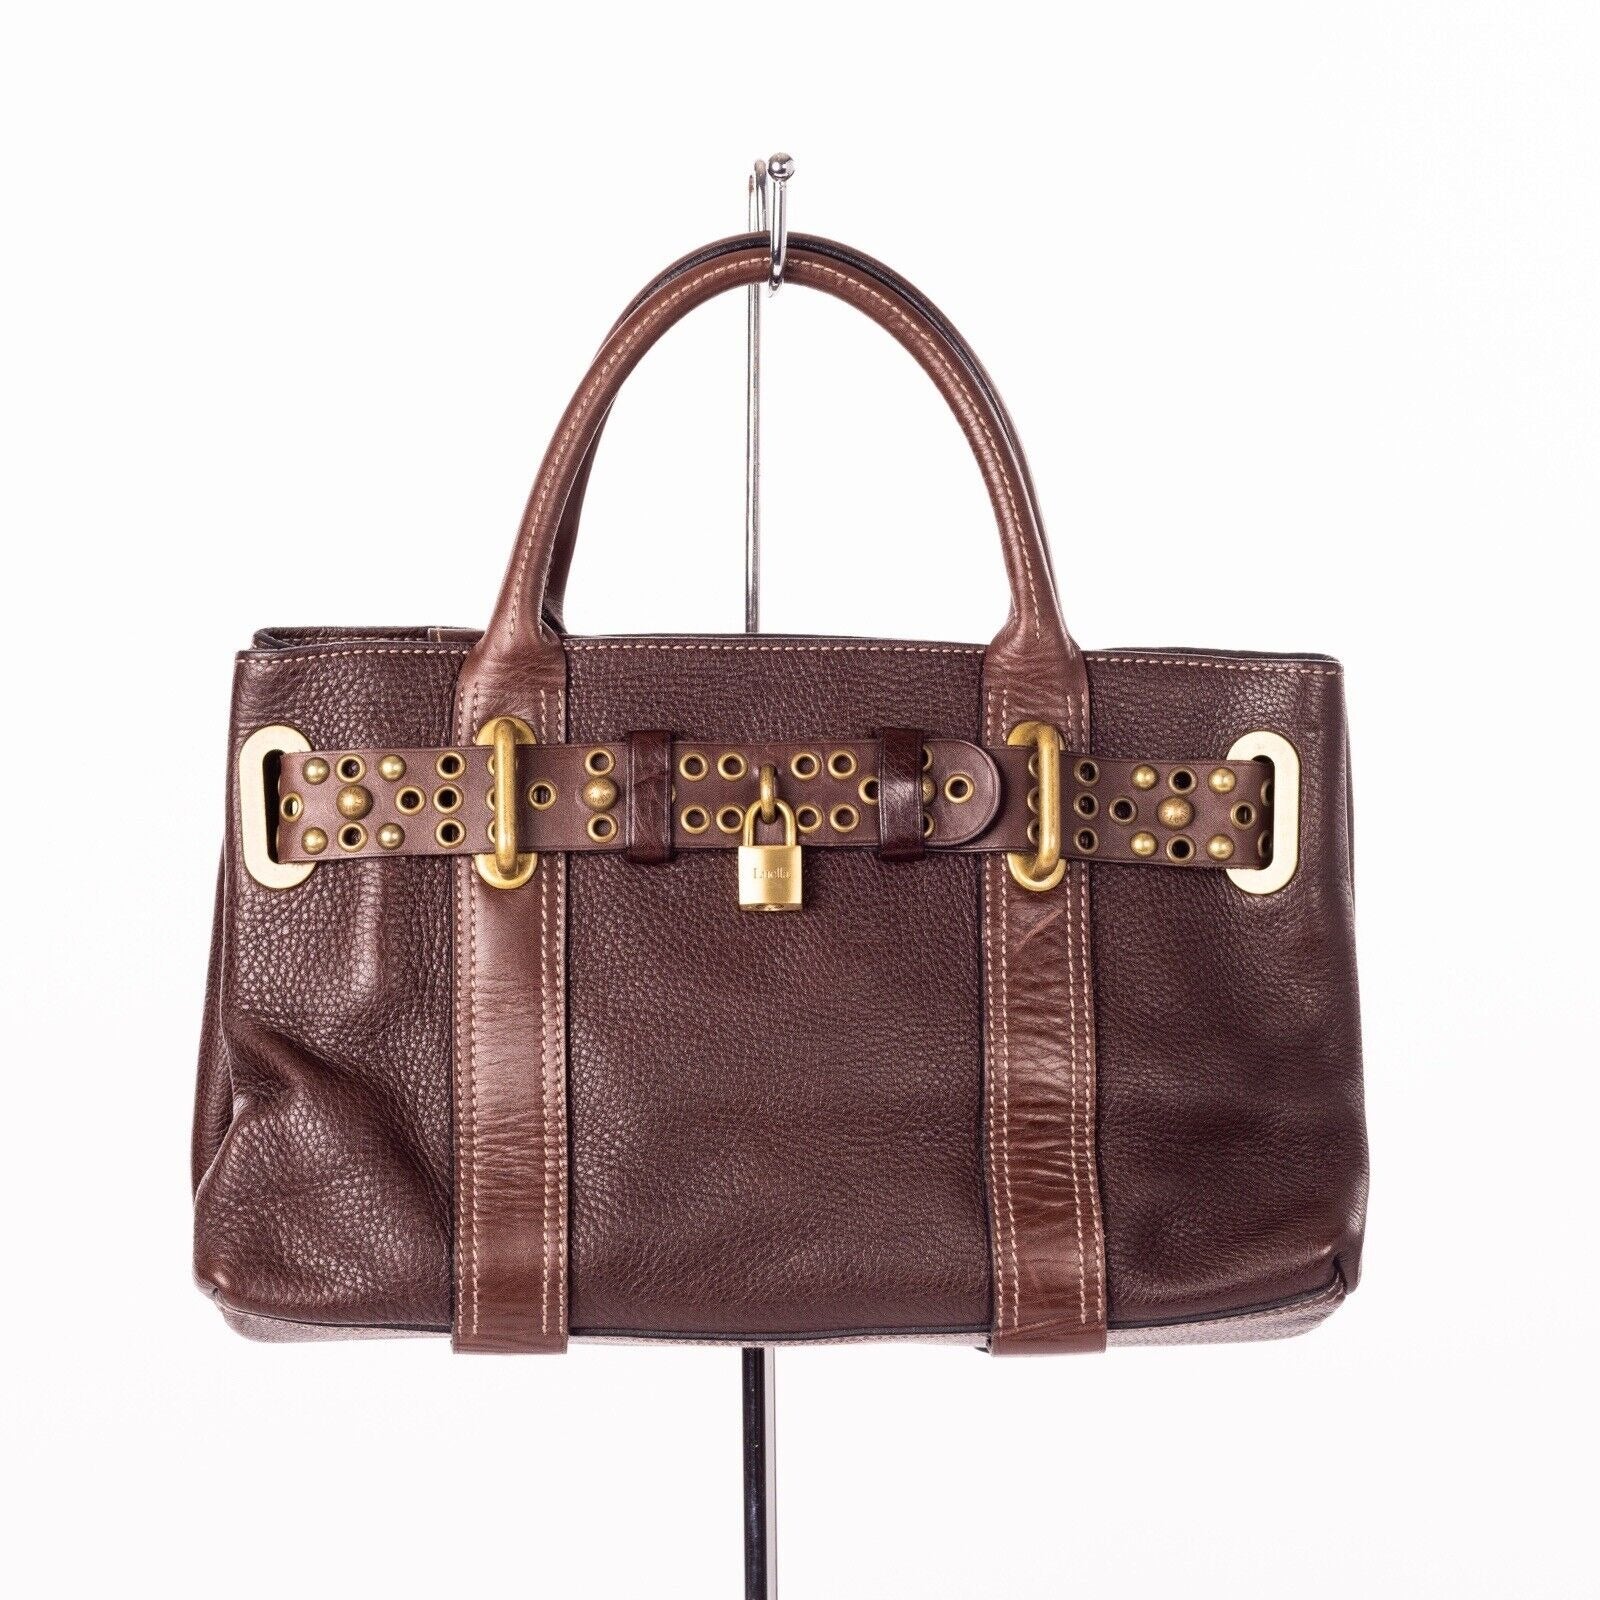 Texturized Tote Style Handbag